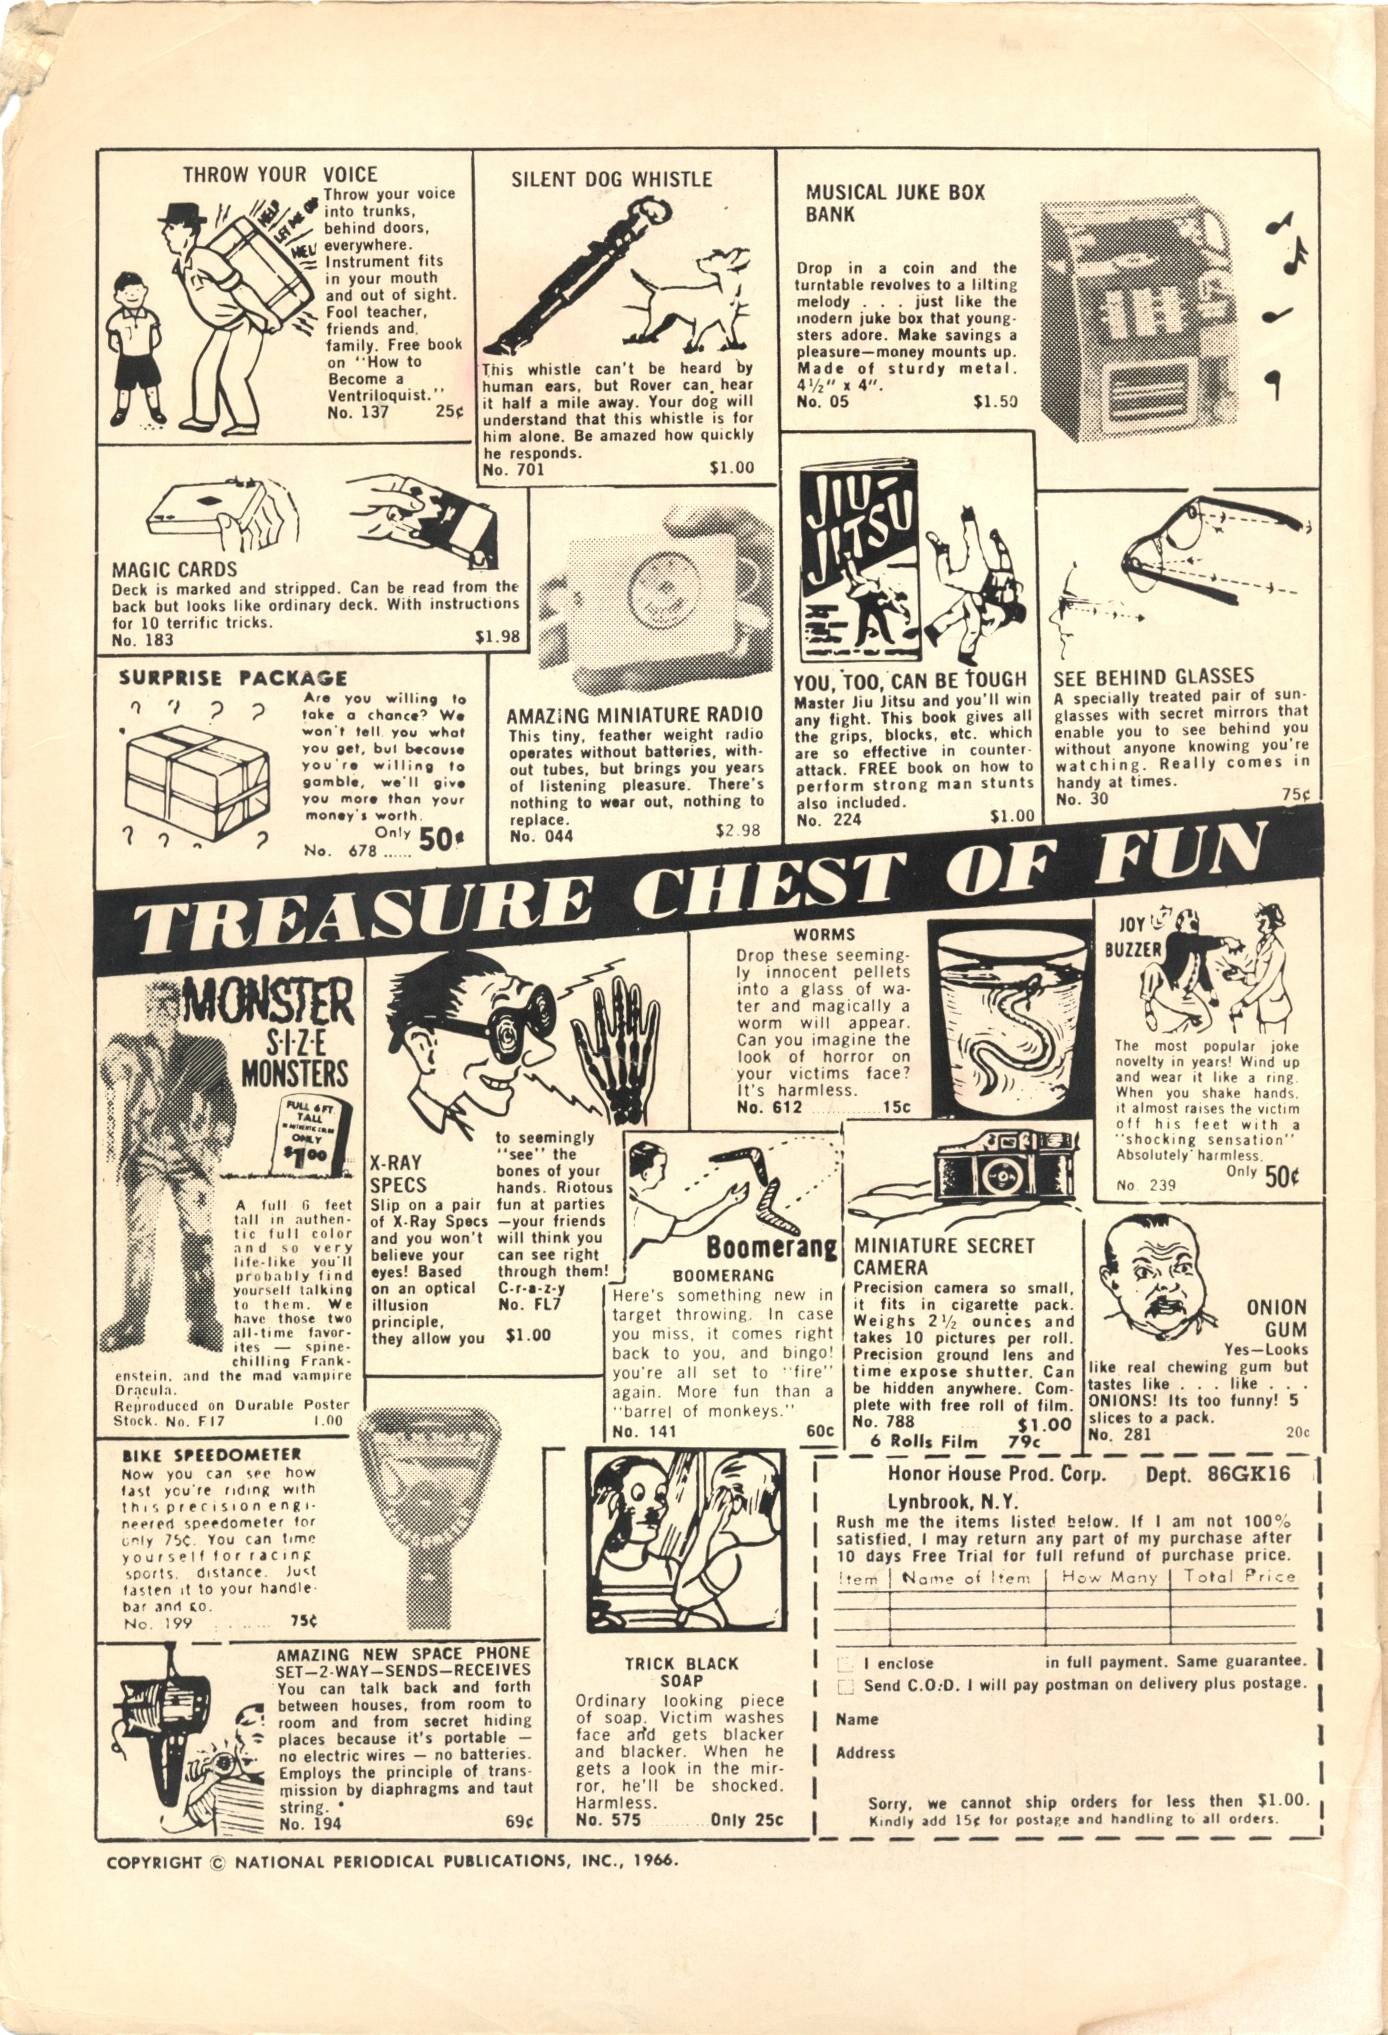 Action Comics (1938) 336 Page 1